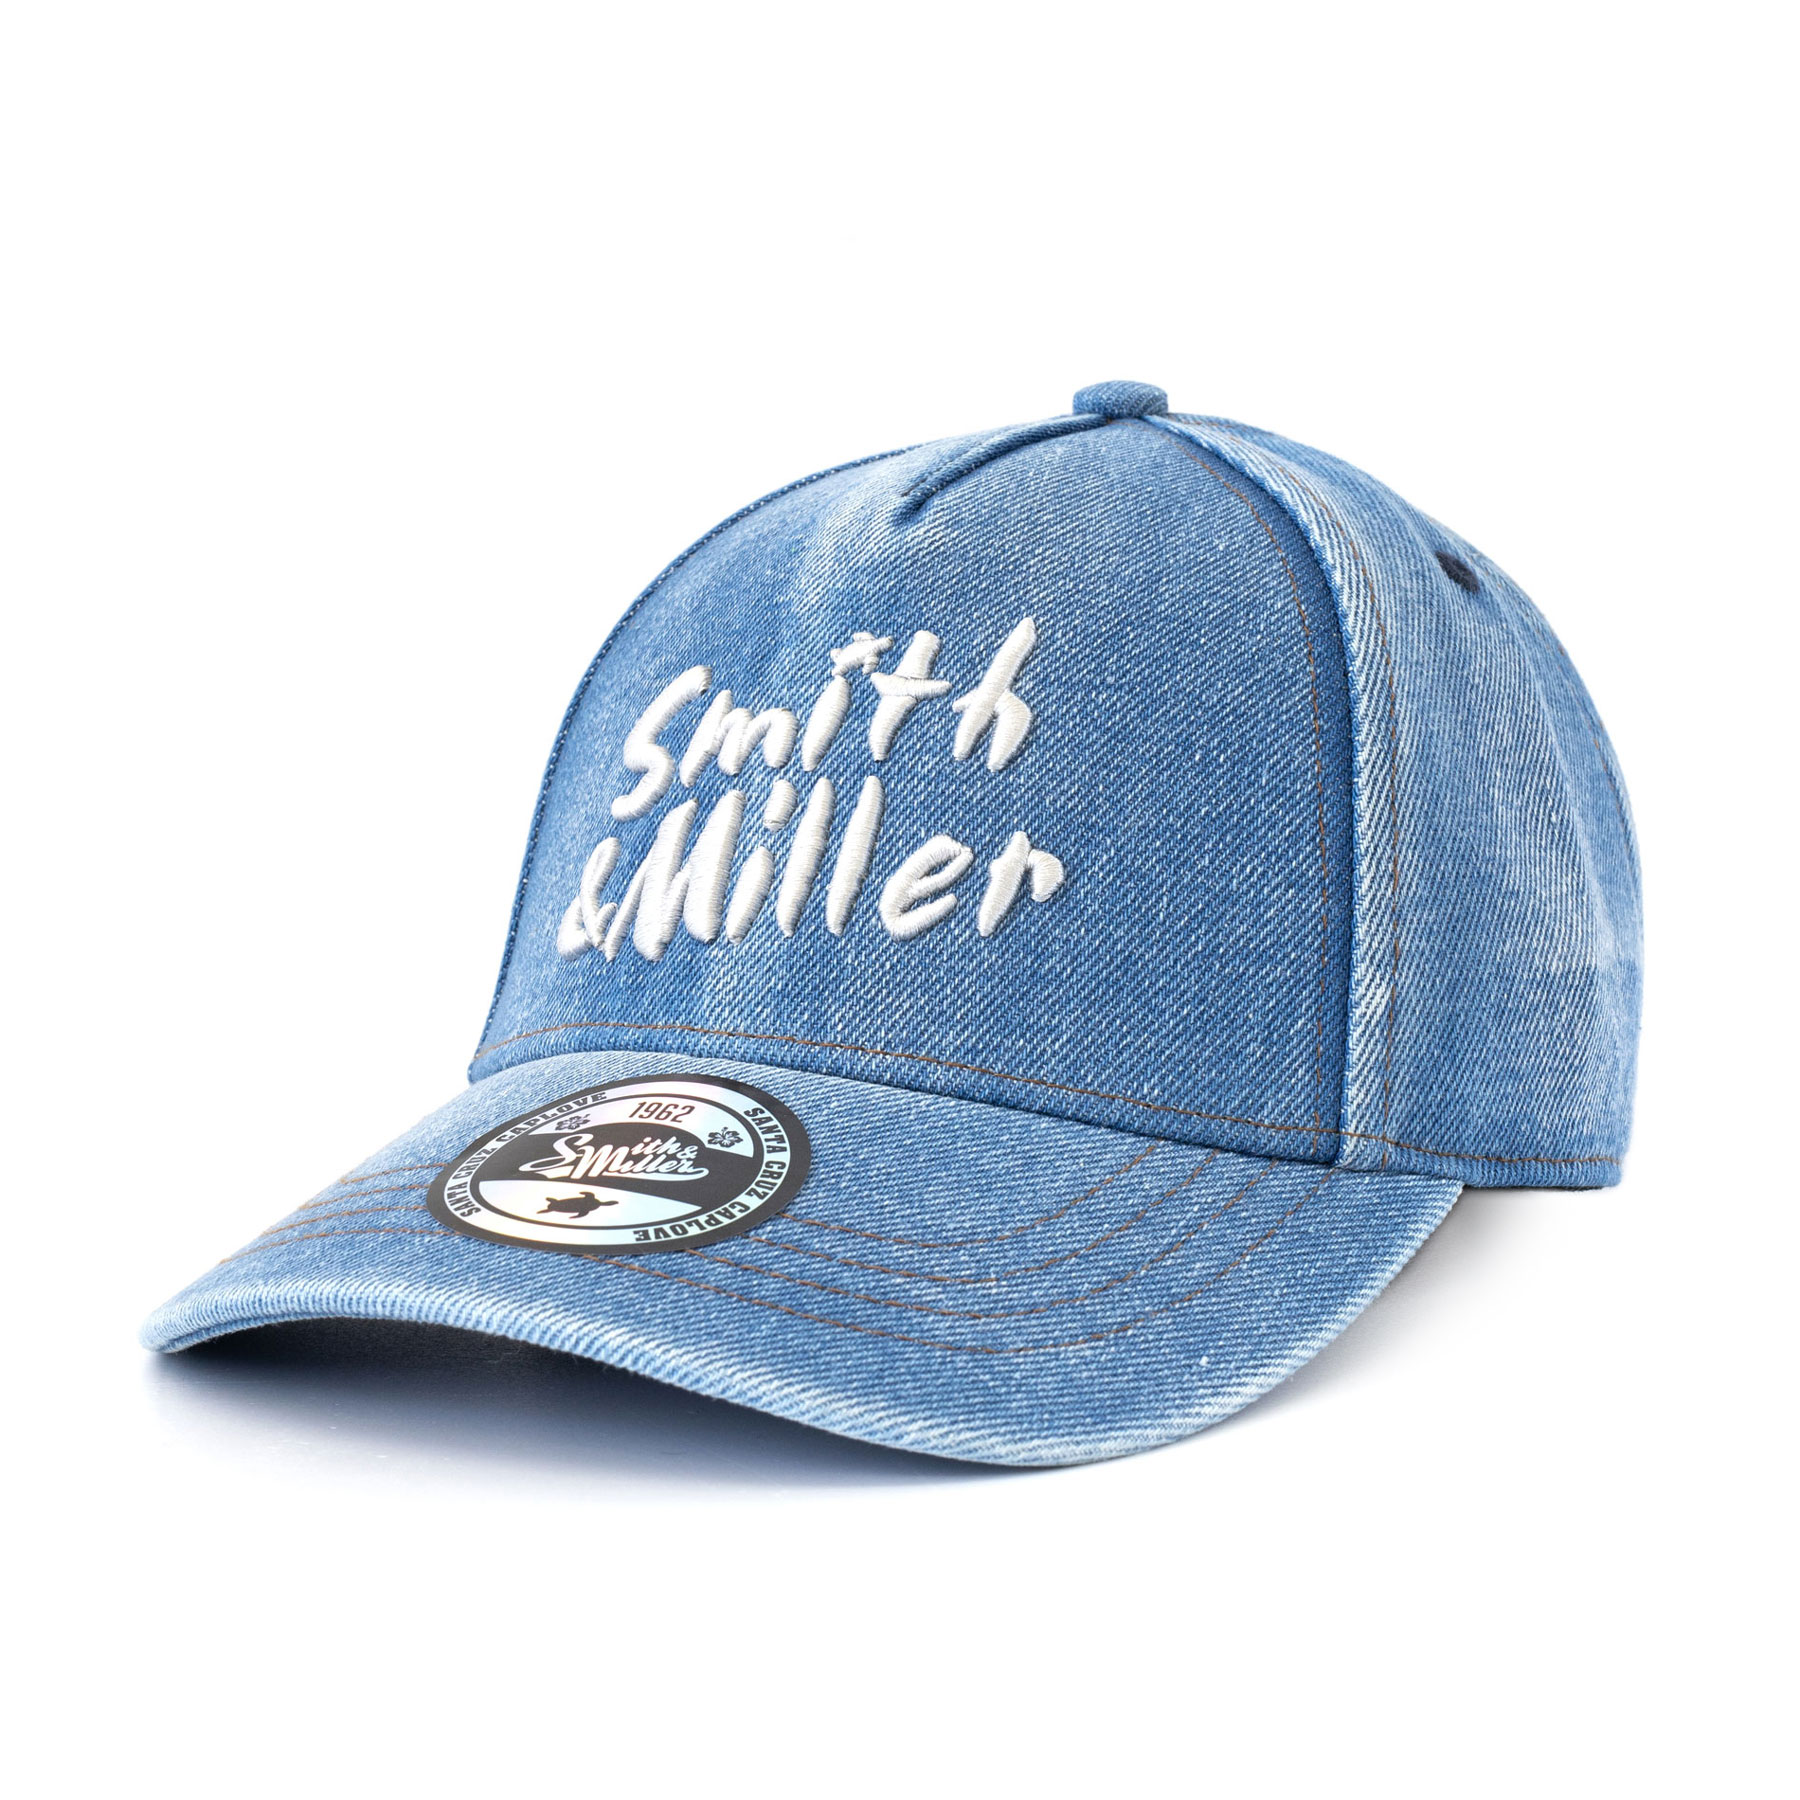 Smith & Miller Veto Curved Cap, lt. blue - denim